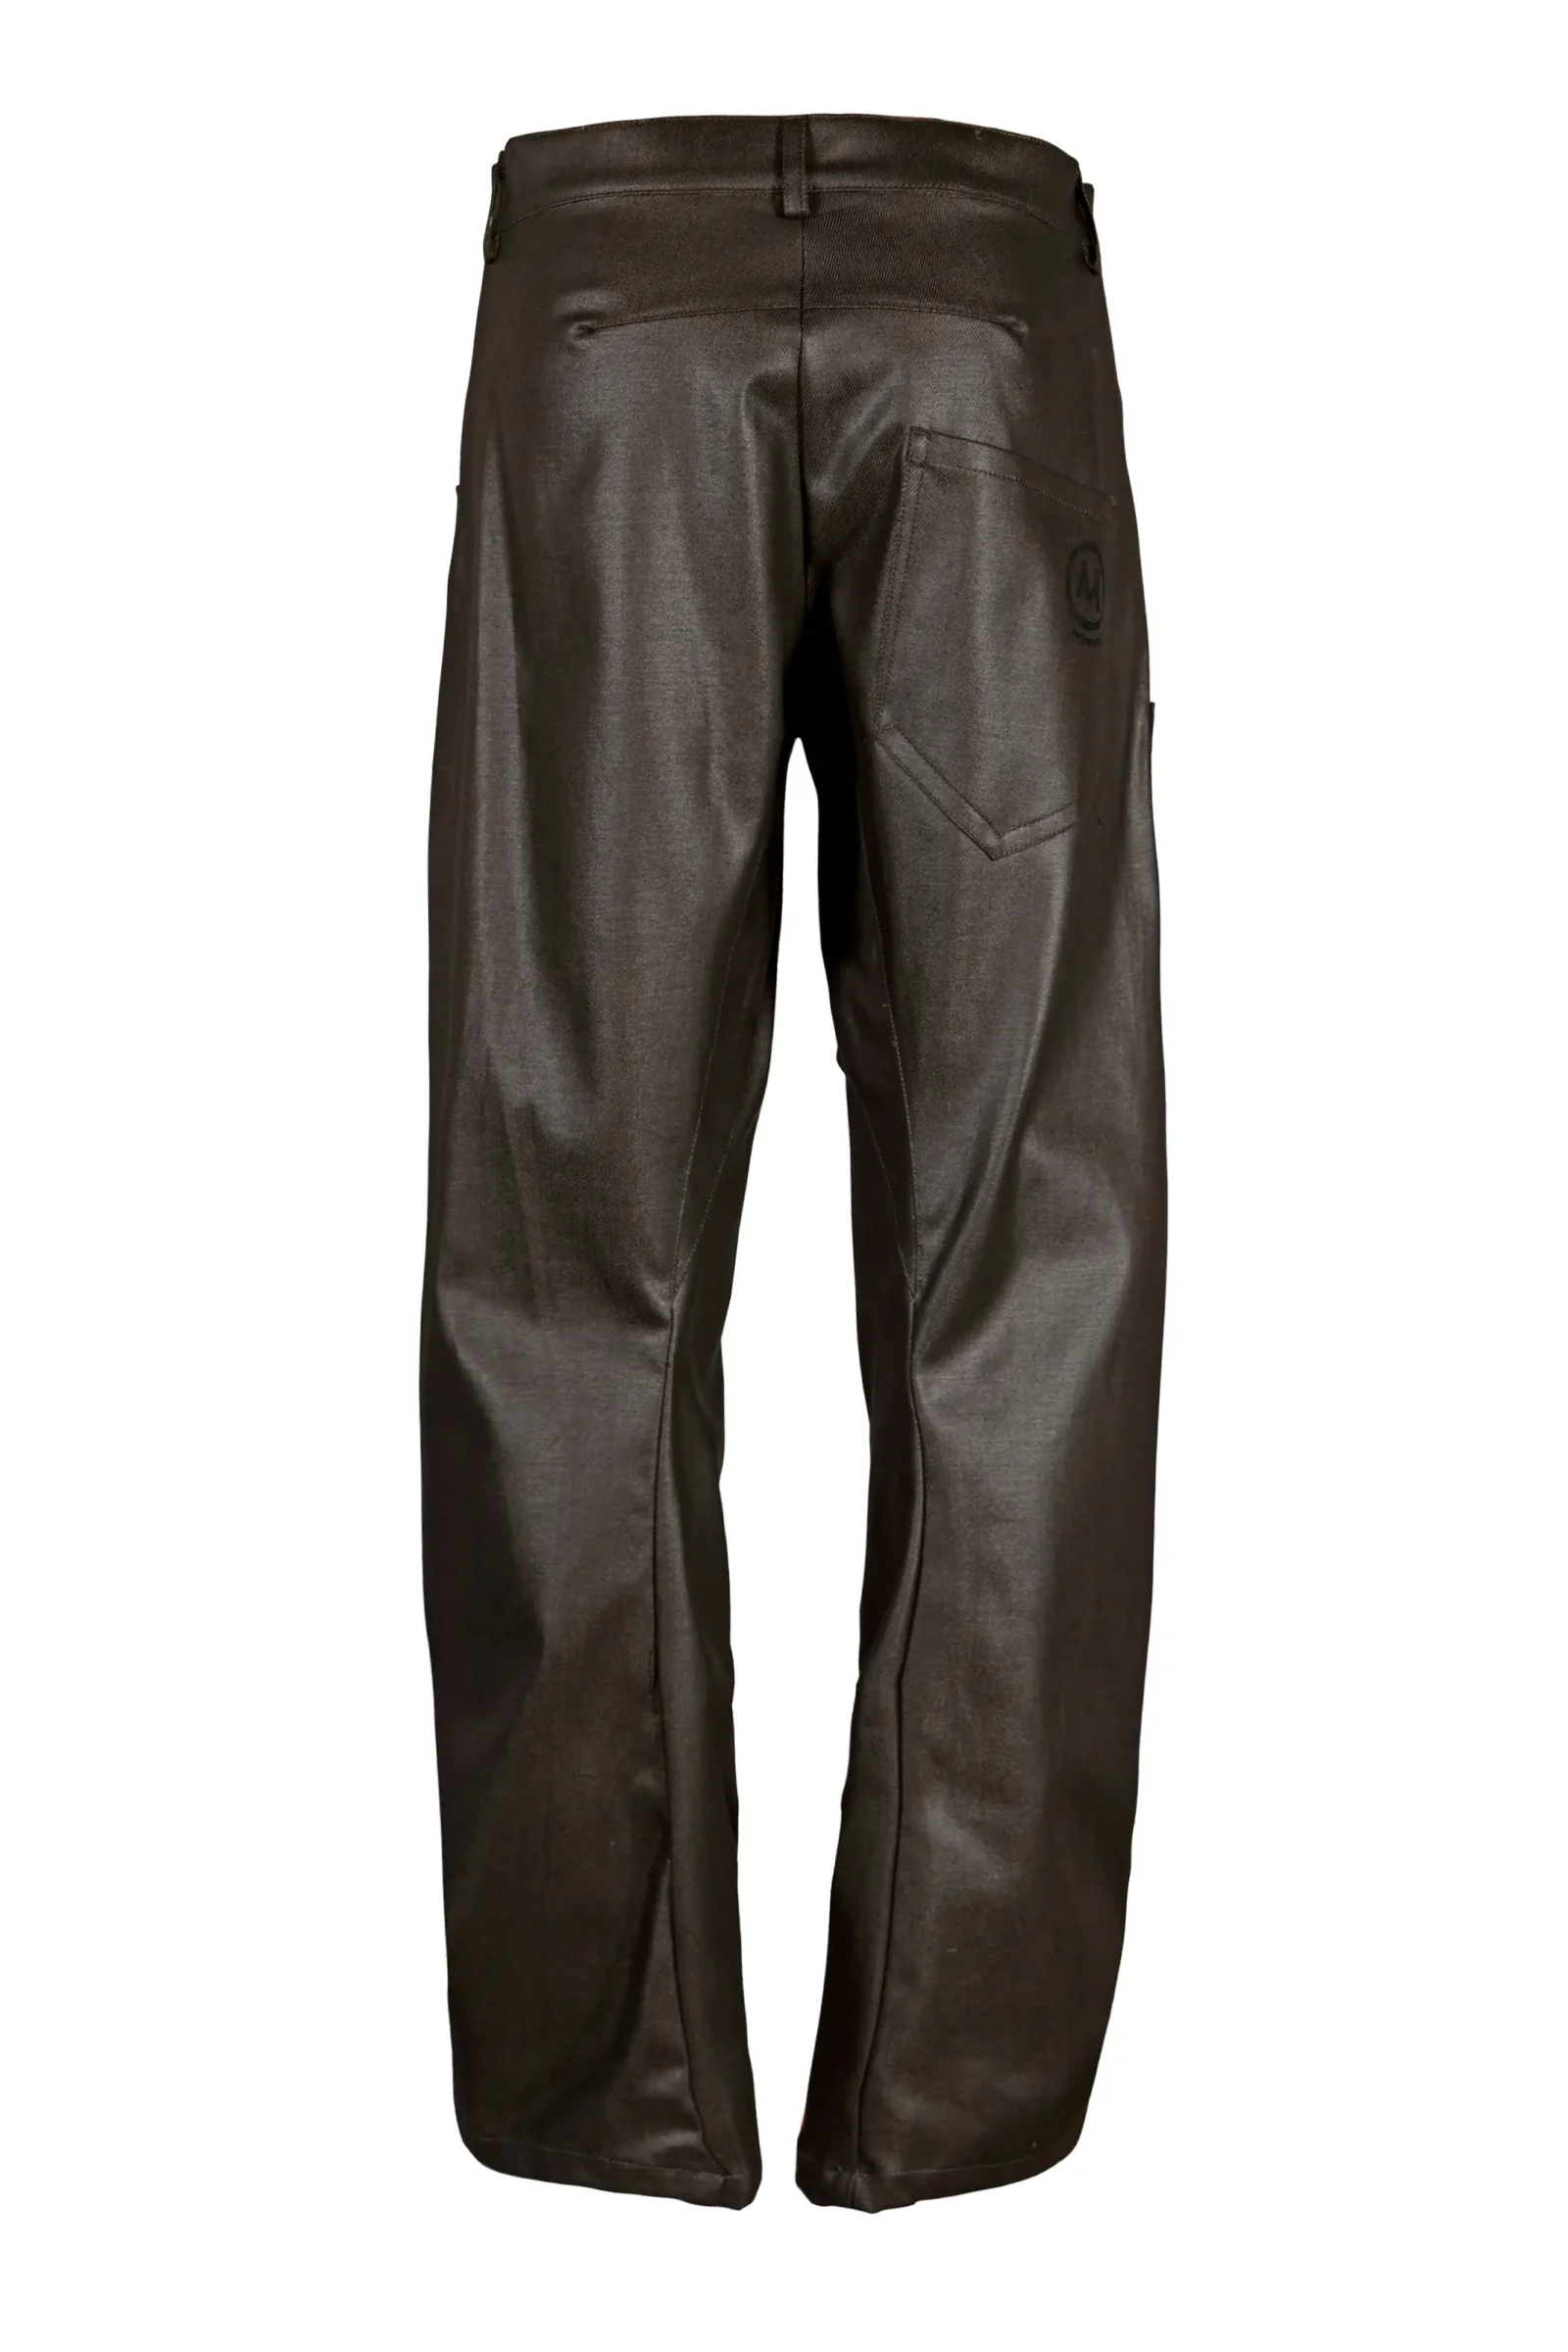 Men's coated denim jeans dark brown GEO PLUS MONVIC